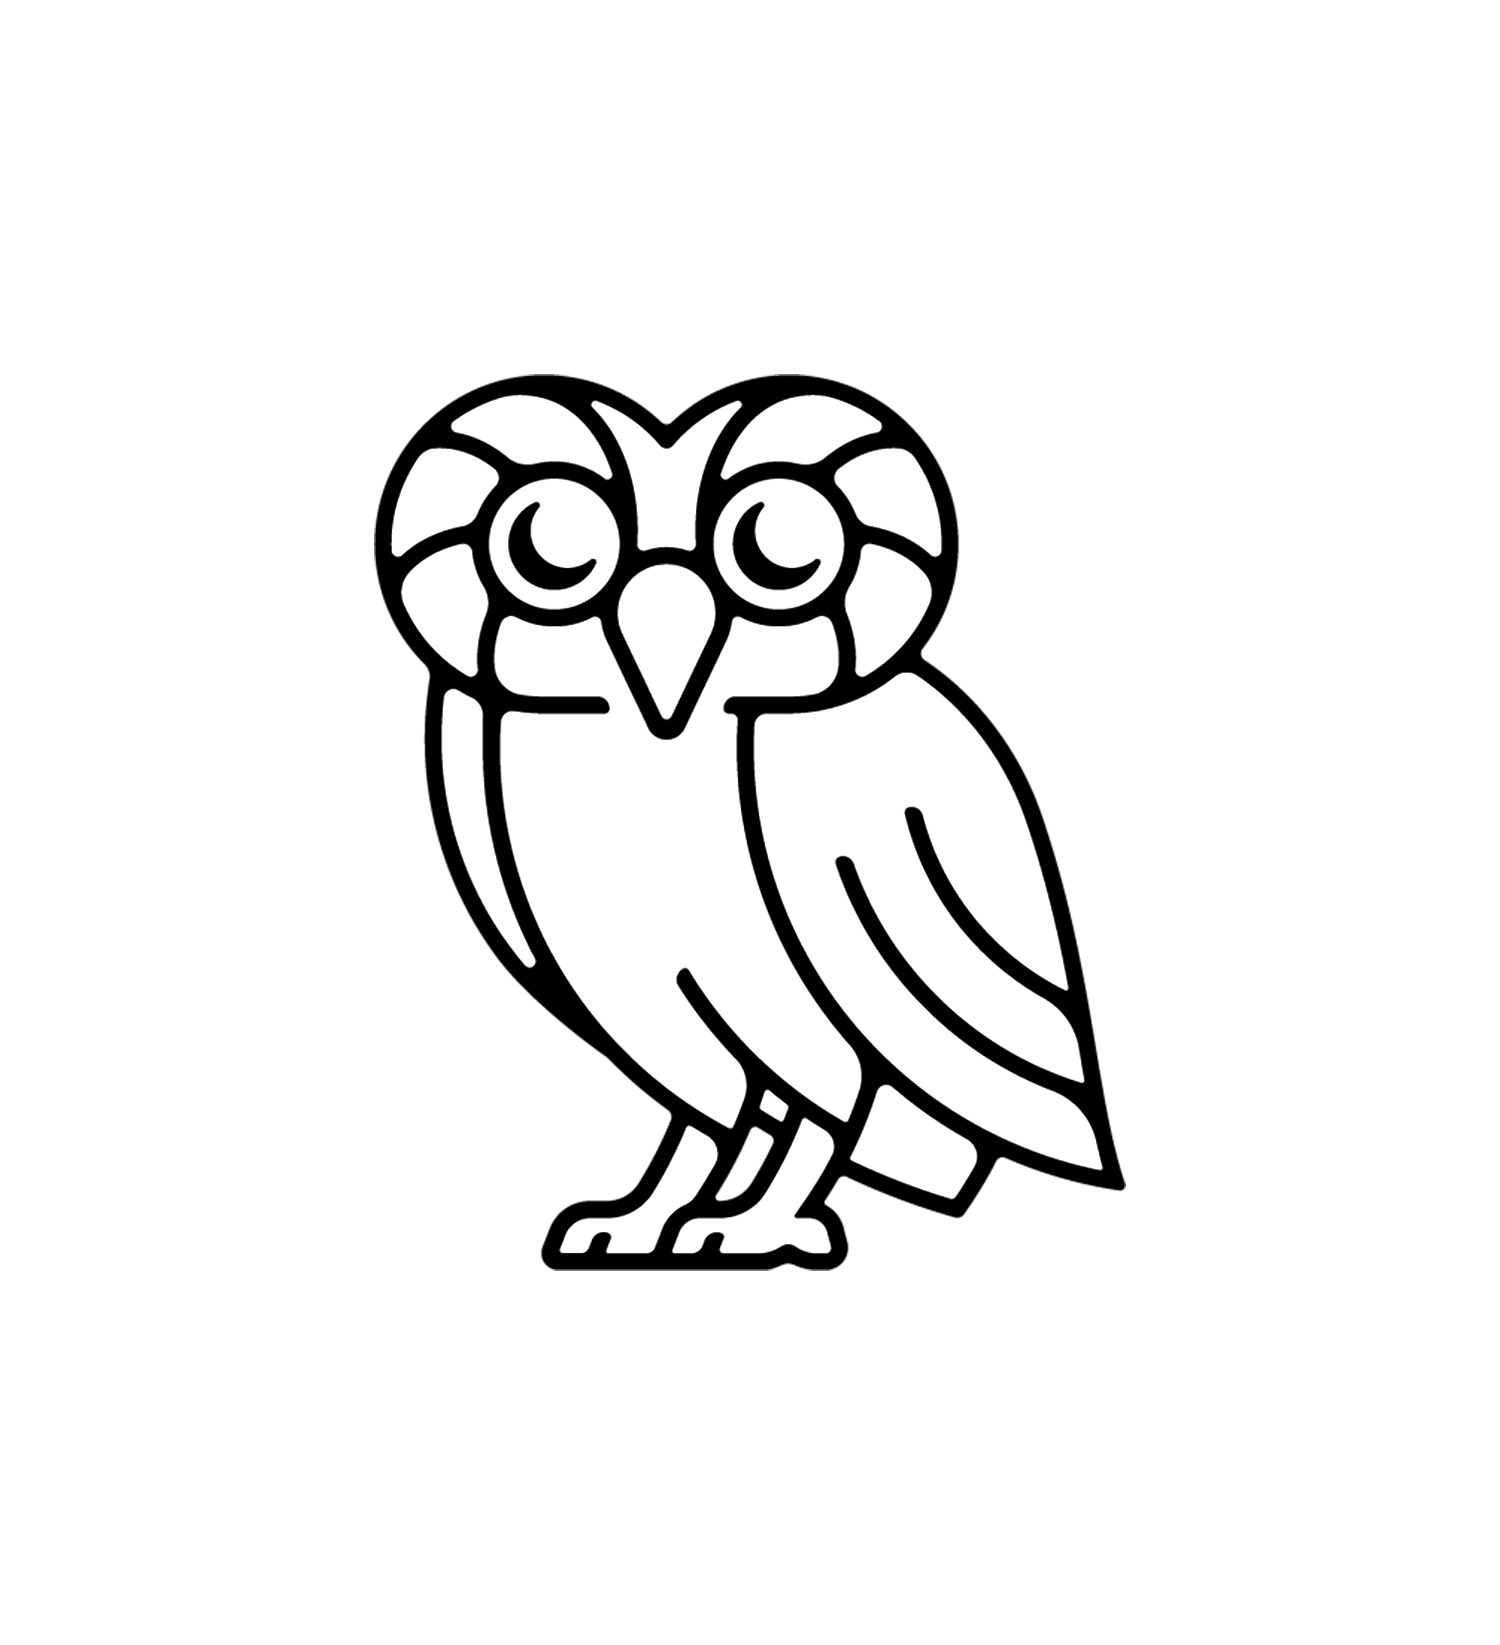 Rice owl image